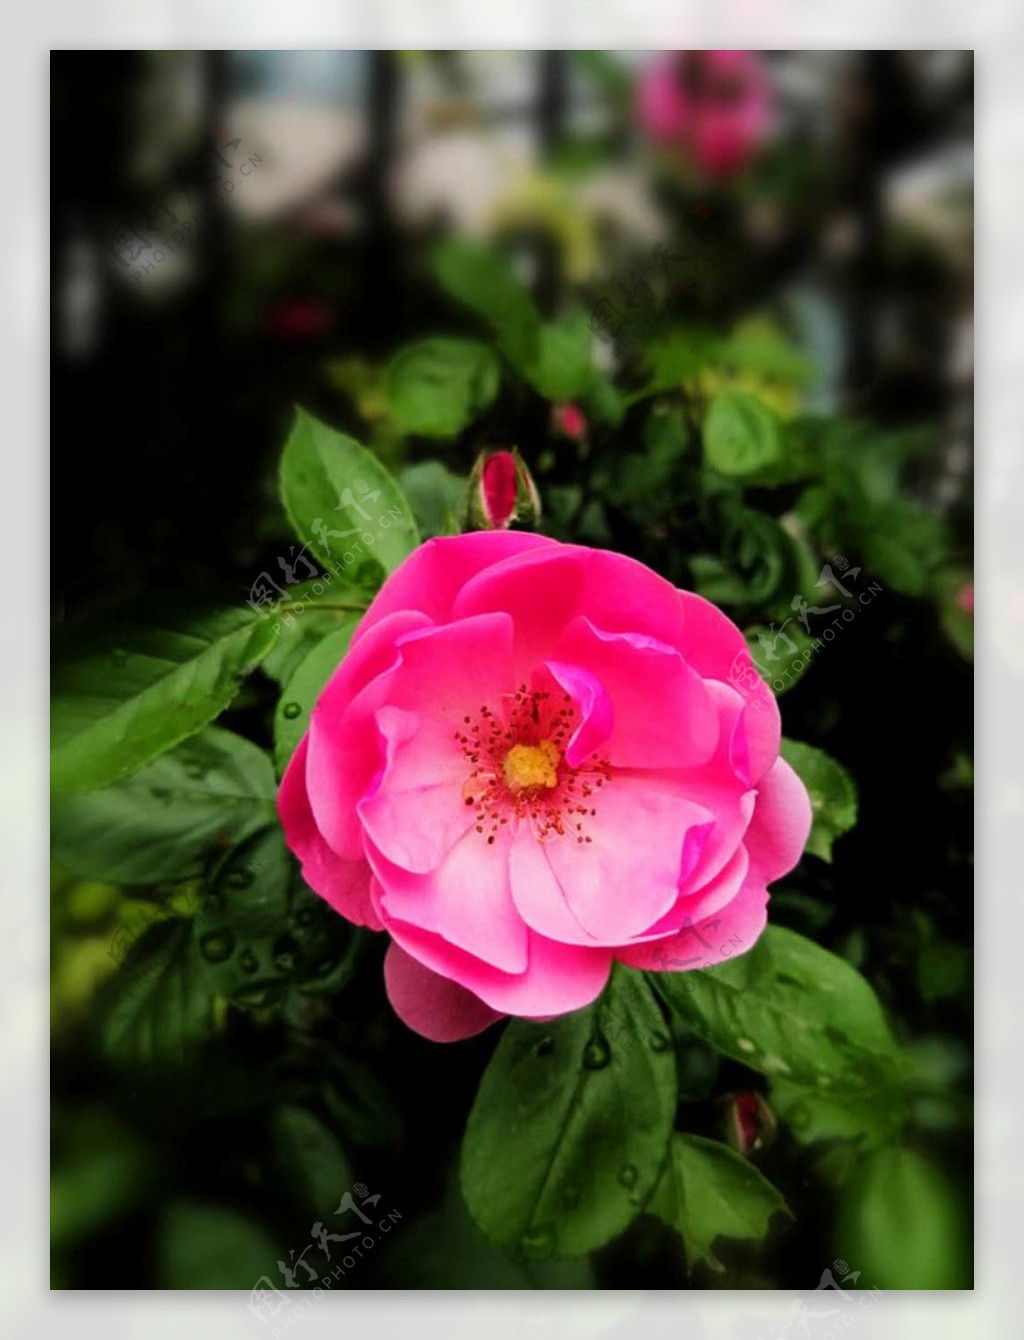 粉色蔷薇